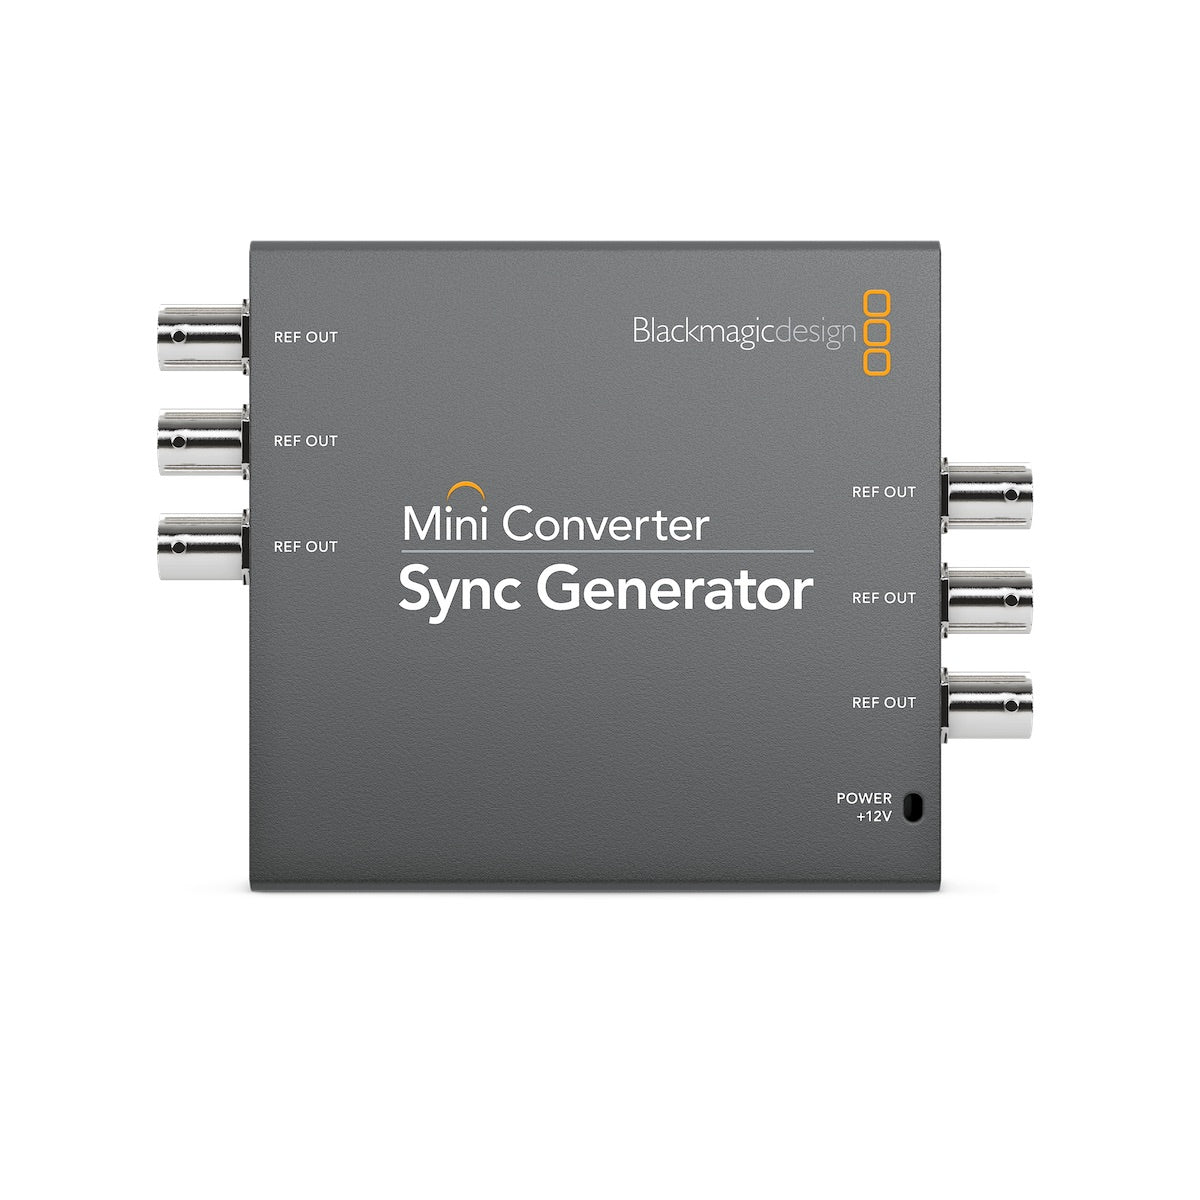 Blackmagic Design Mini Converter Sync Generator, front